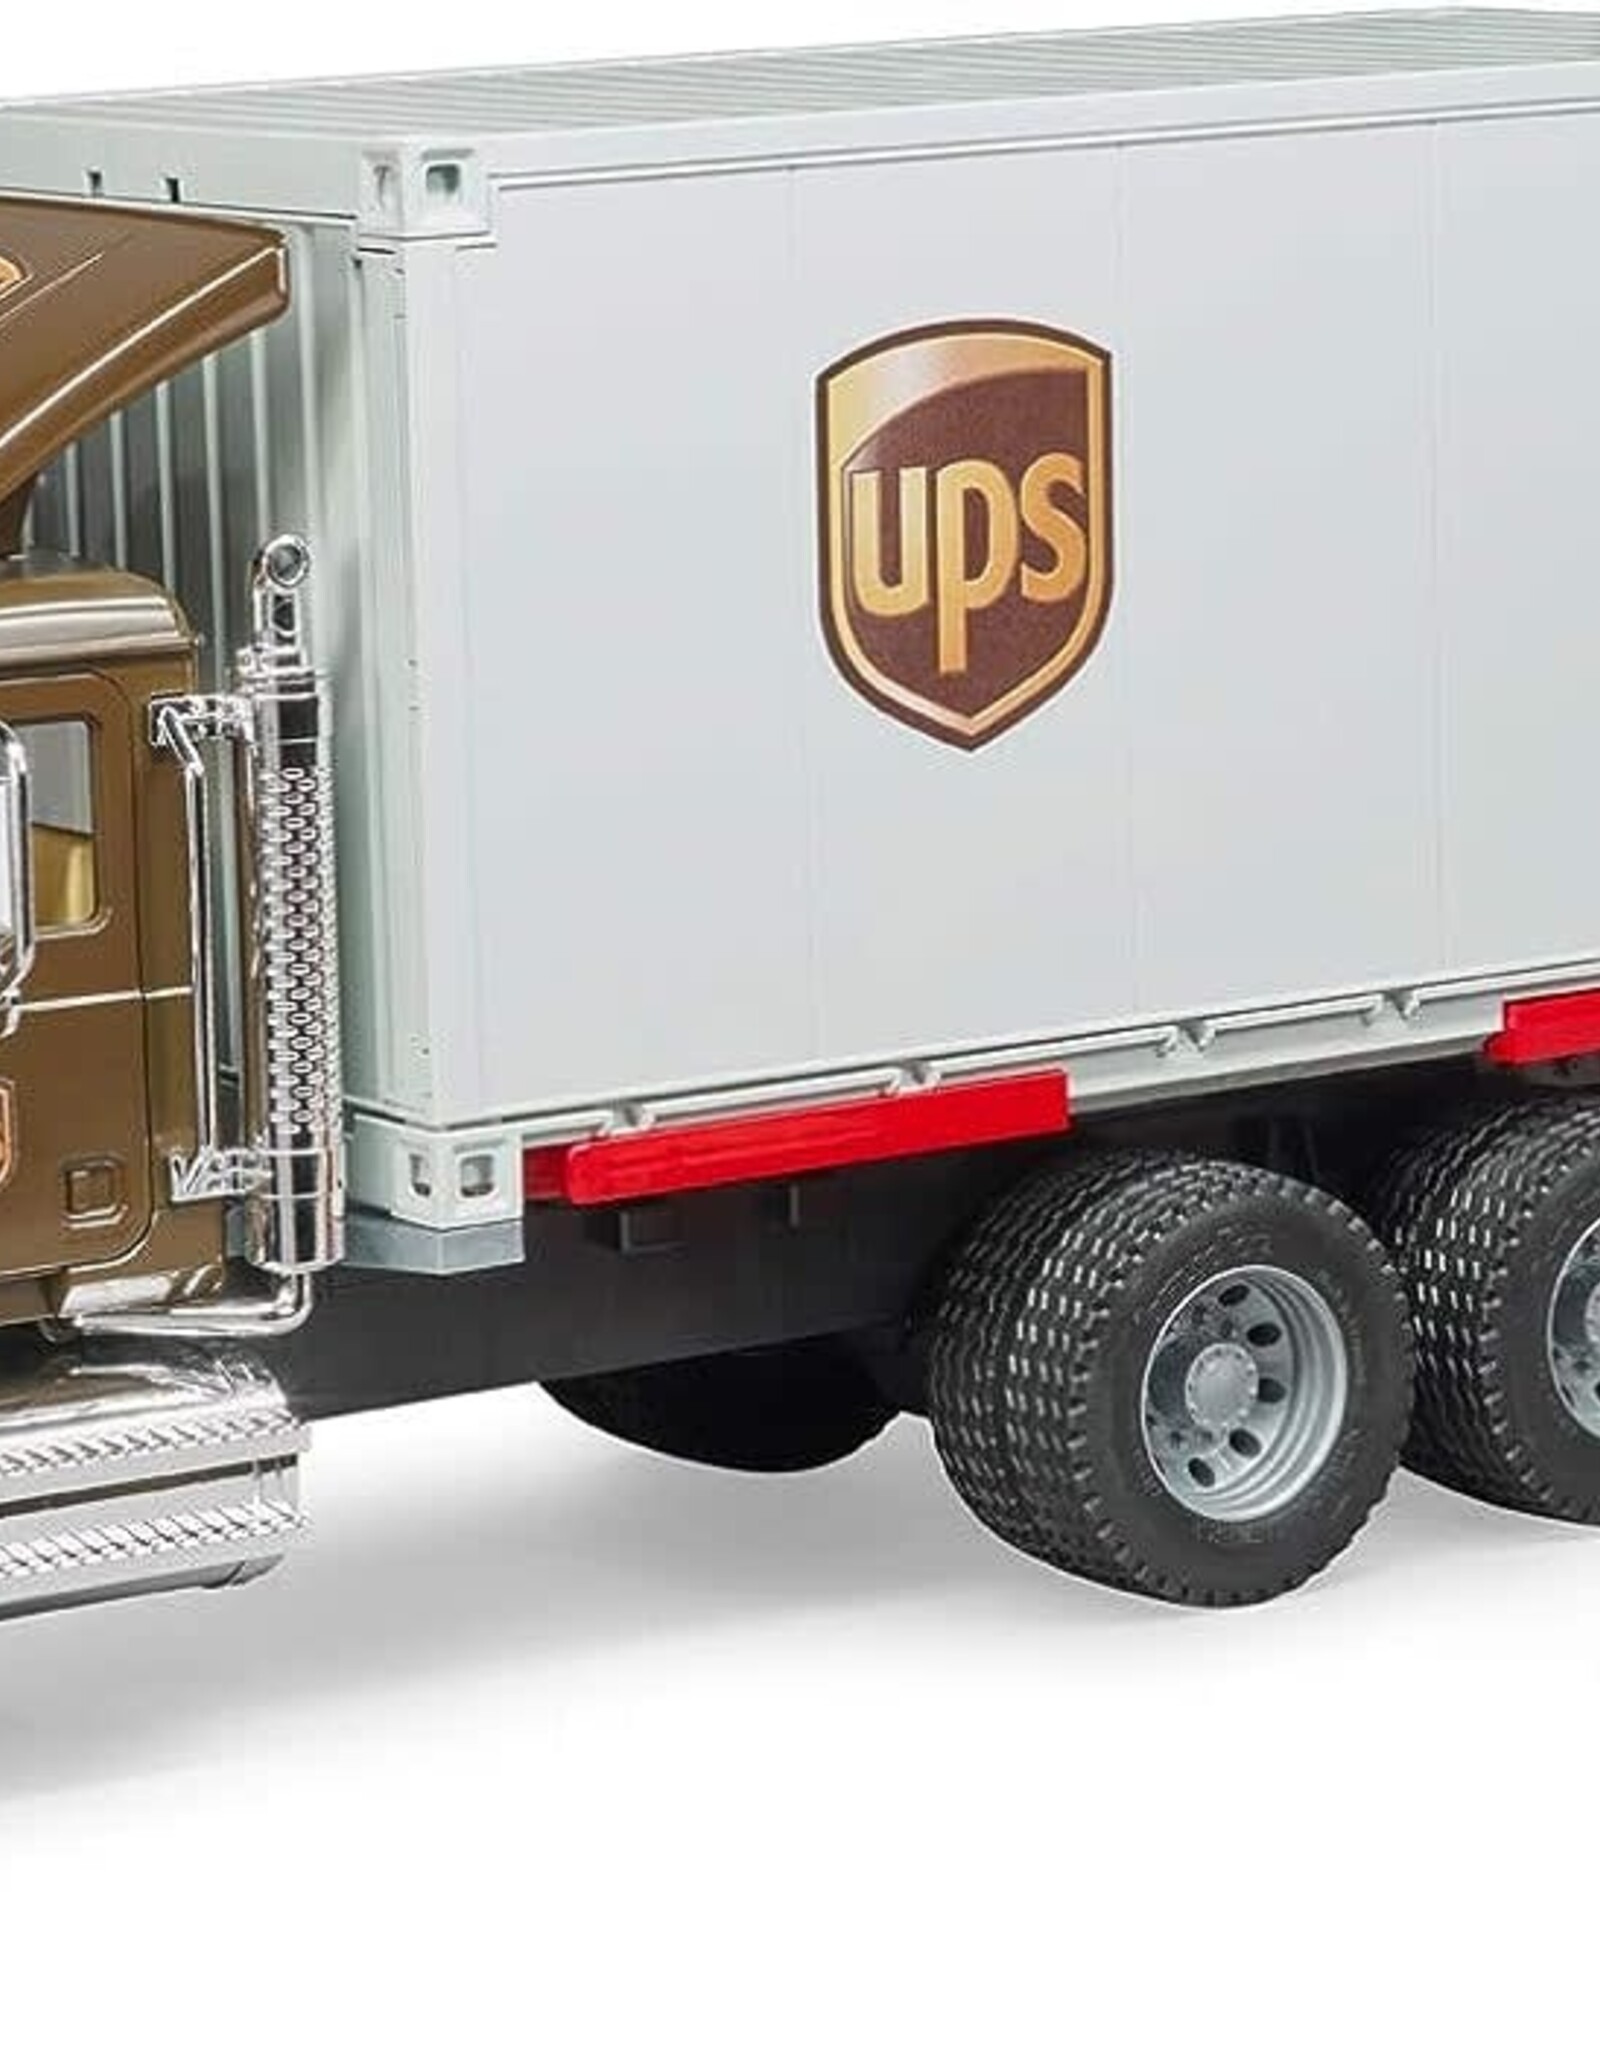 Bruder MACK Granite UPS Logistics Truckw/ Forklift